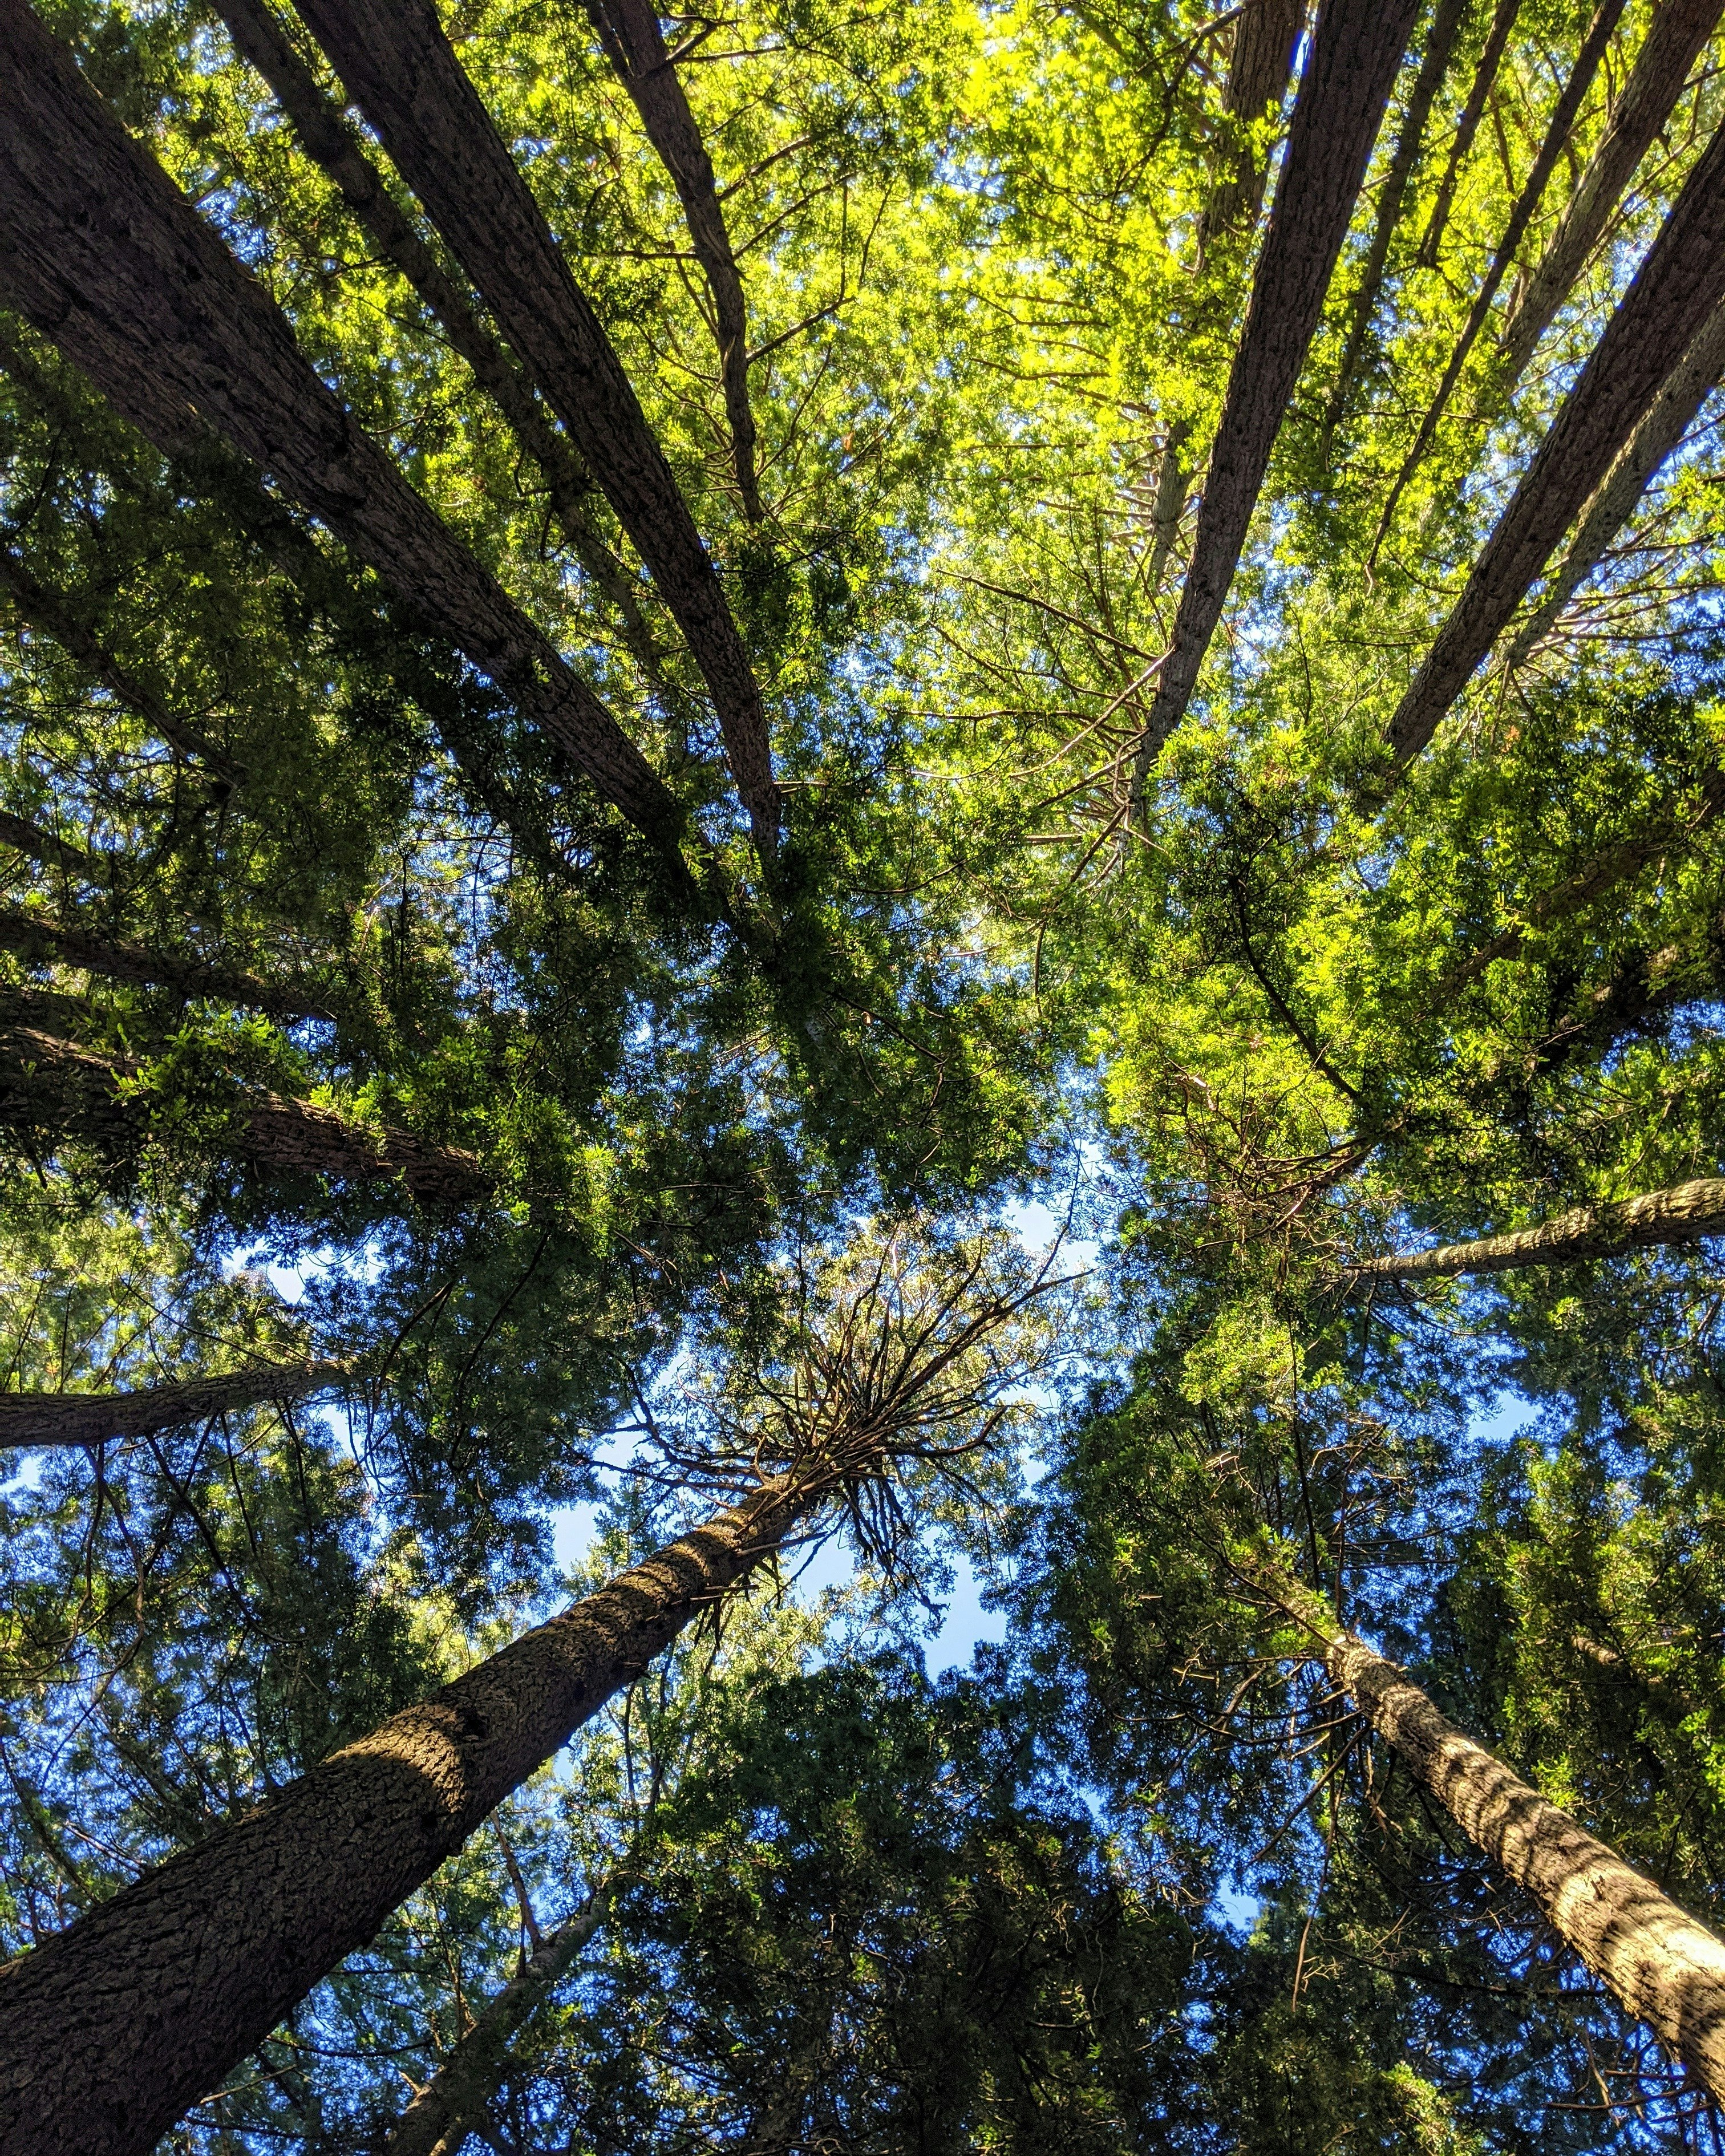 Trees shot from below near Muir Woods in California